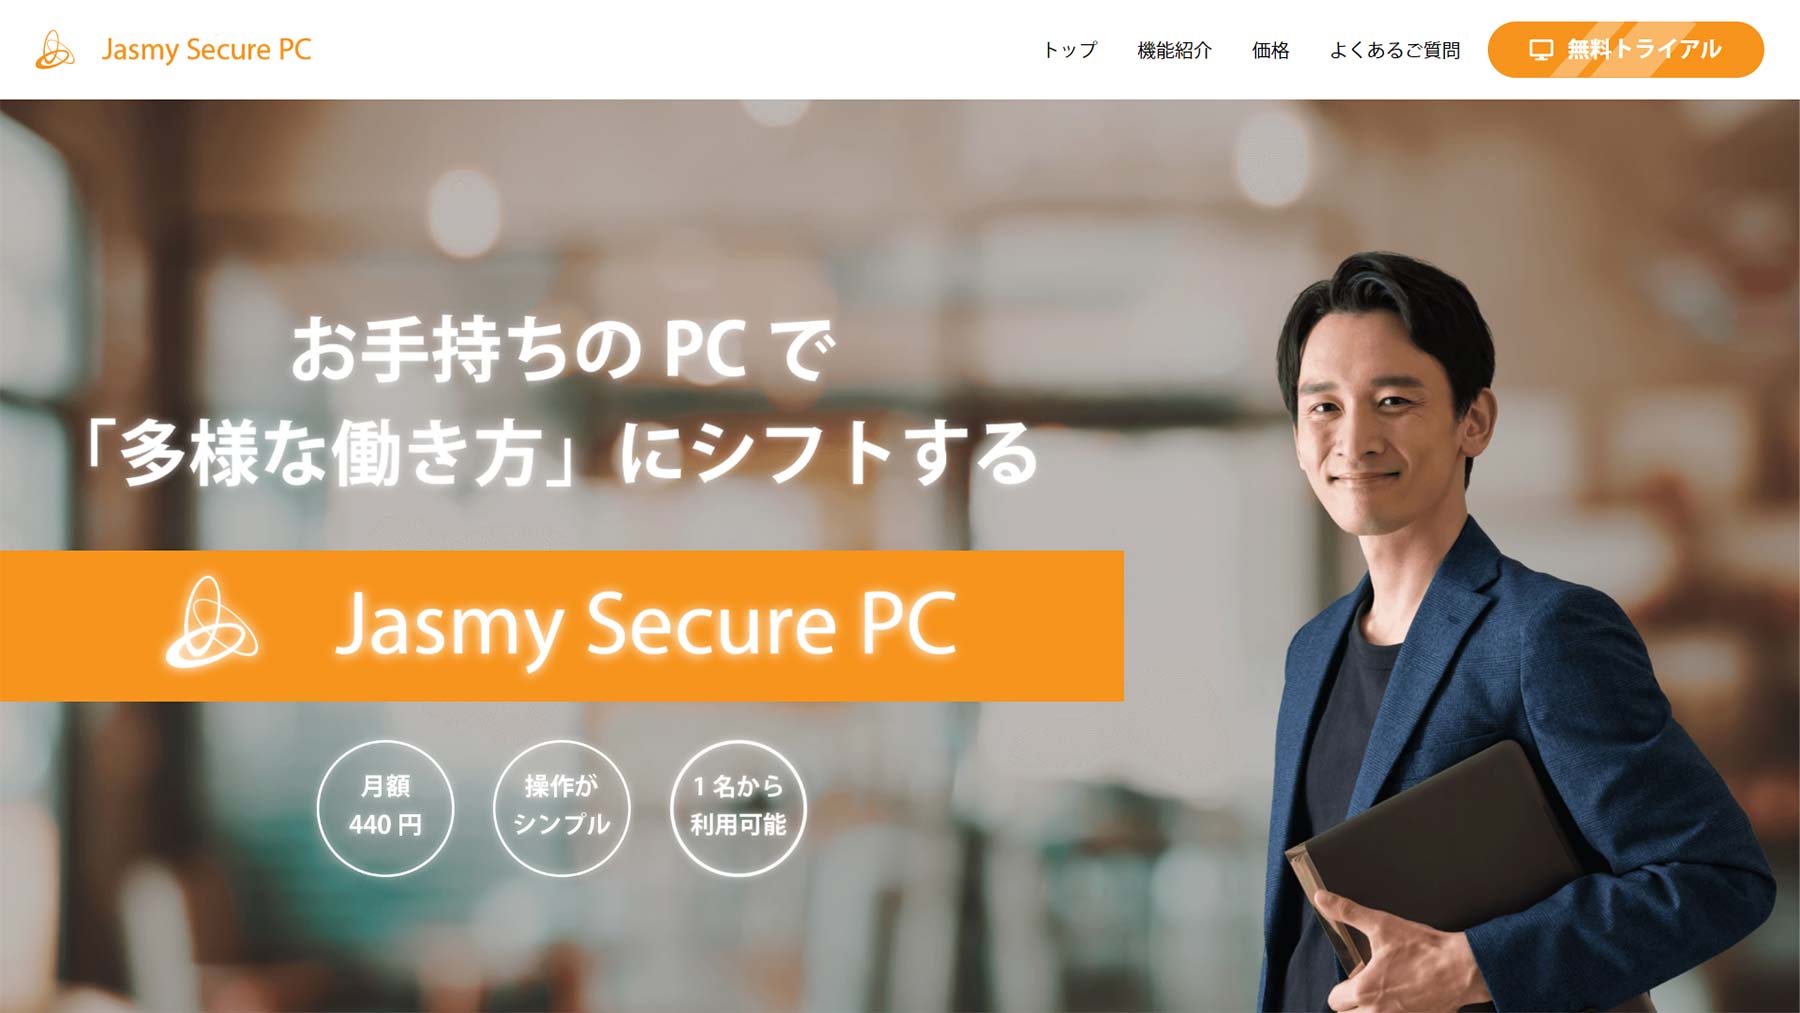 Jasmy Secure PC公式Webサイト